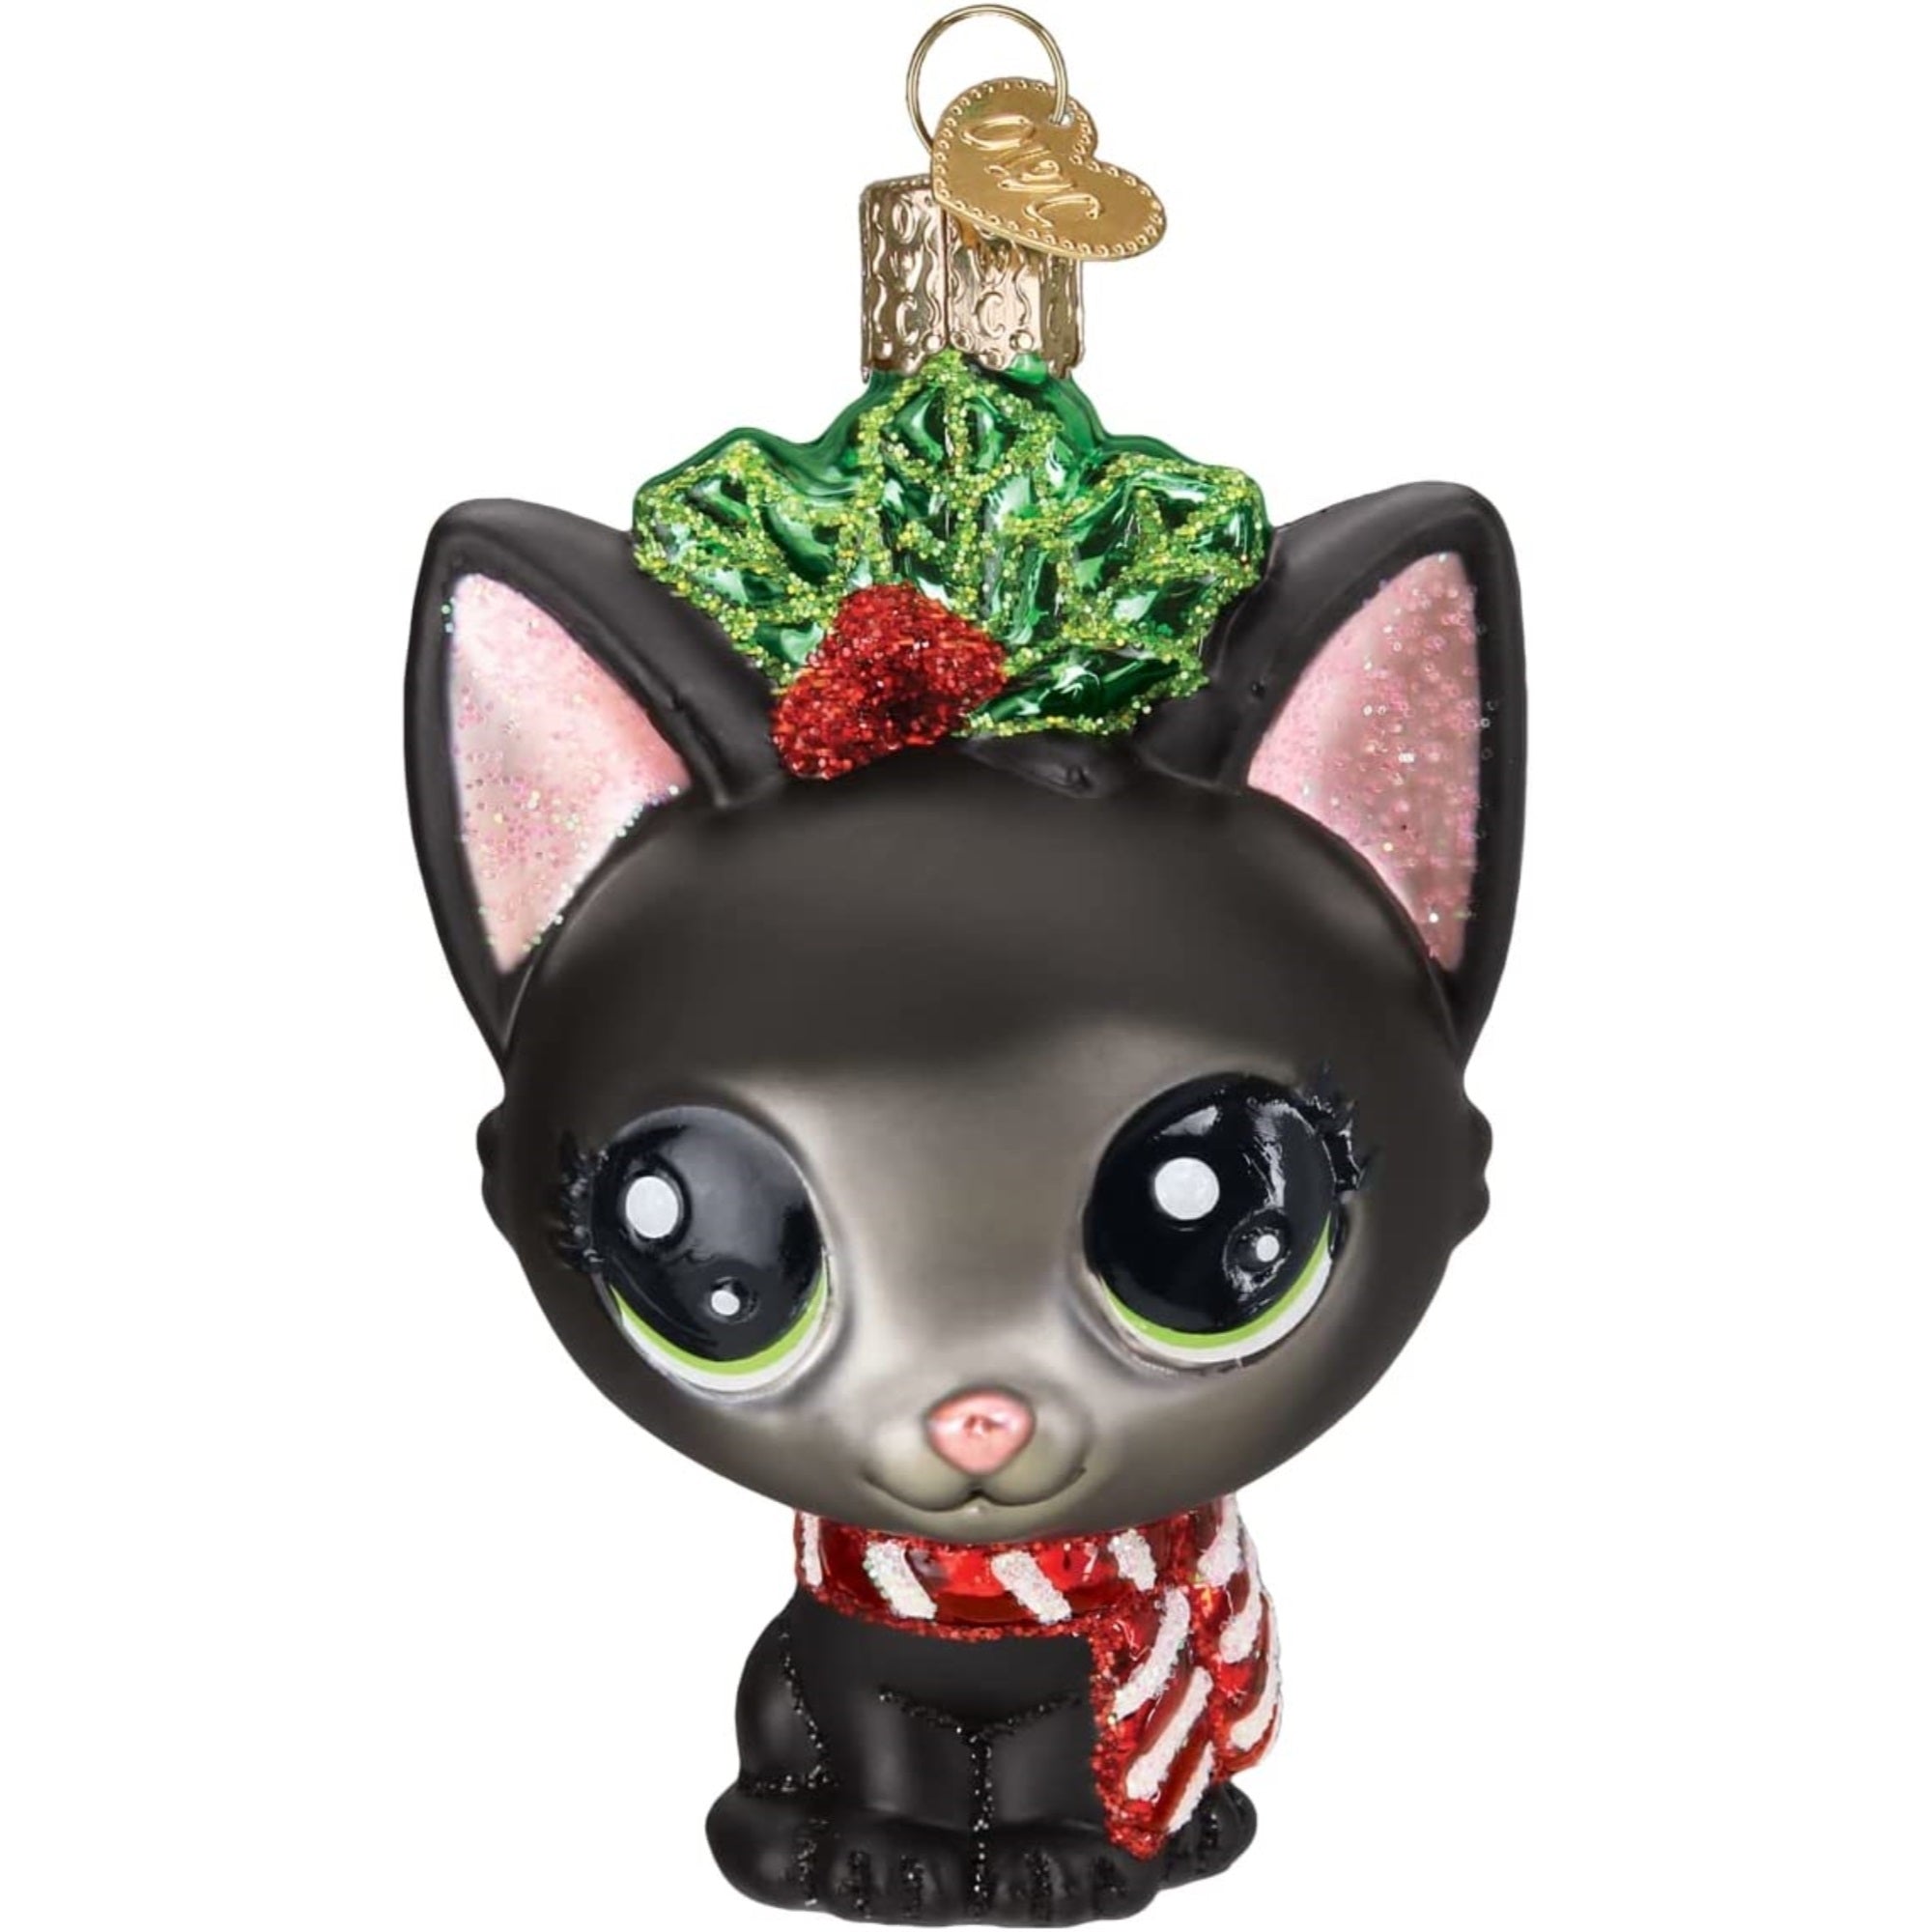 Old World Christmas Blown Glass Christmas Ornaments, Littlest Pet Shop Jade